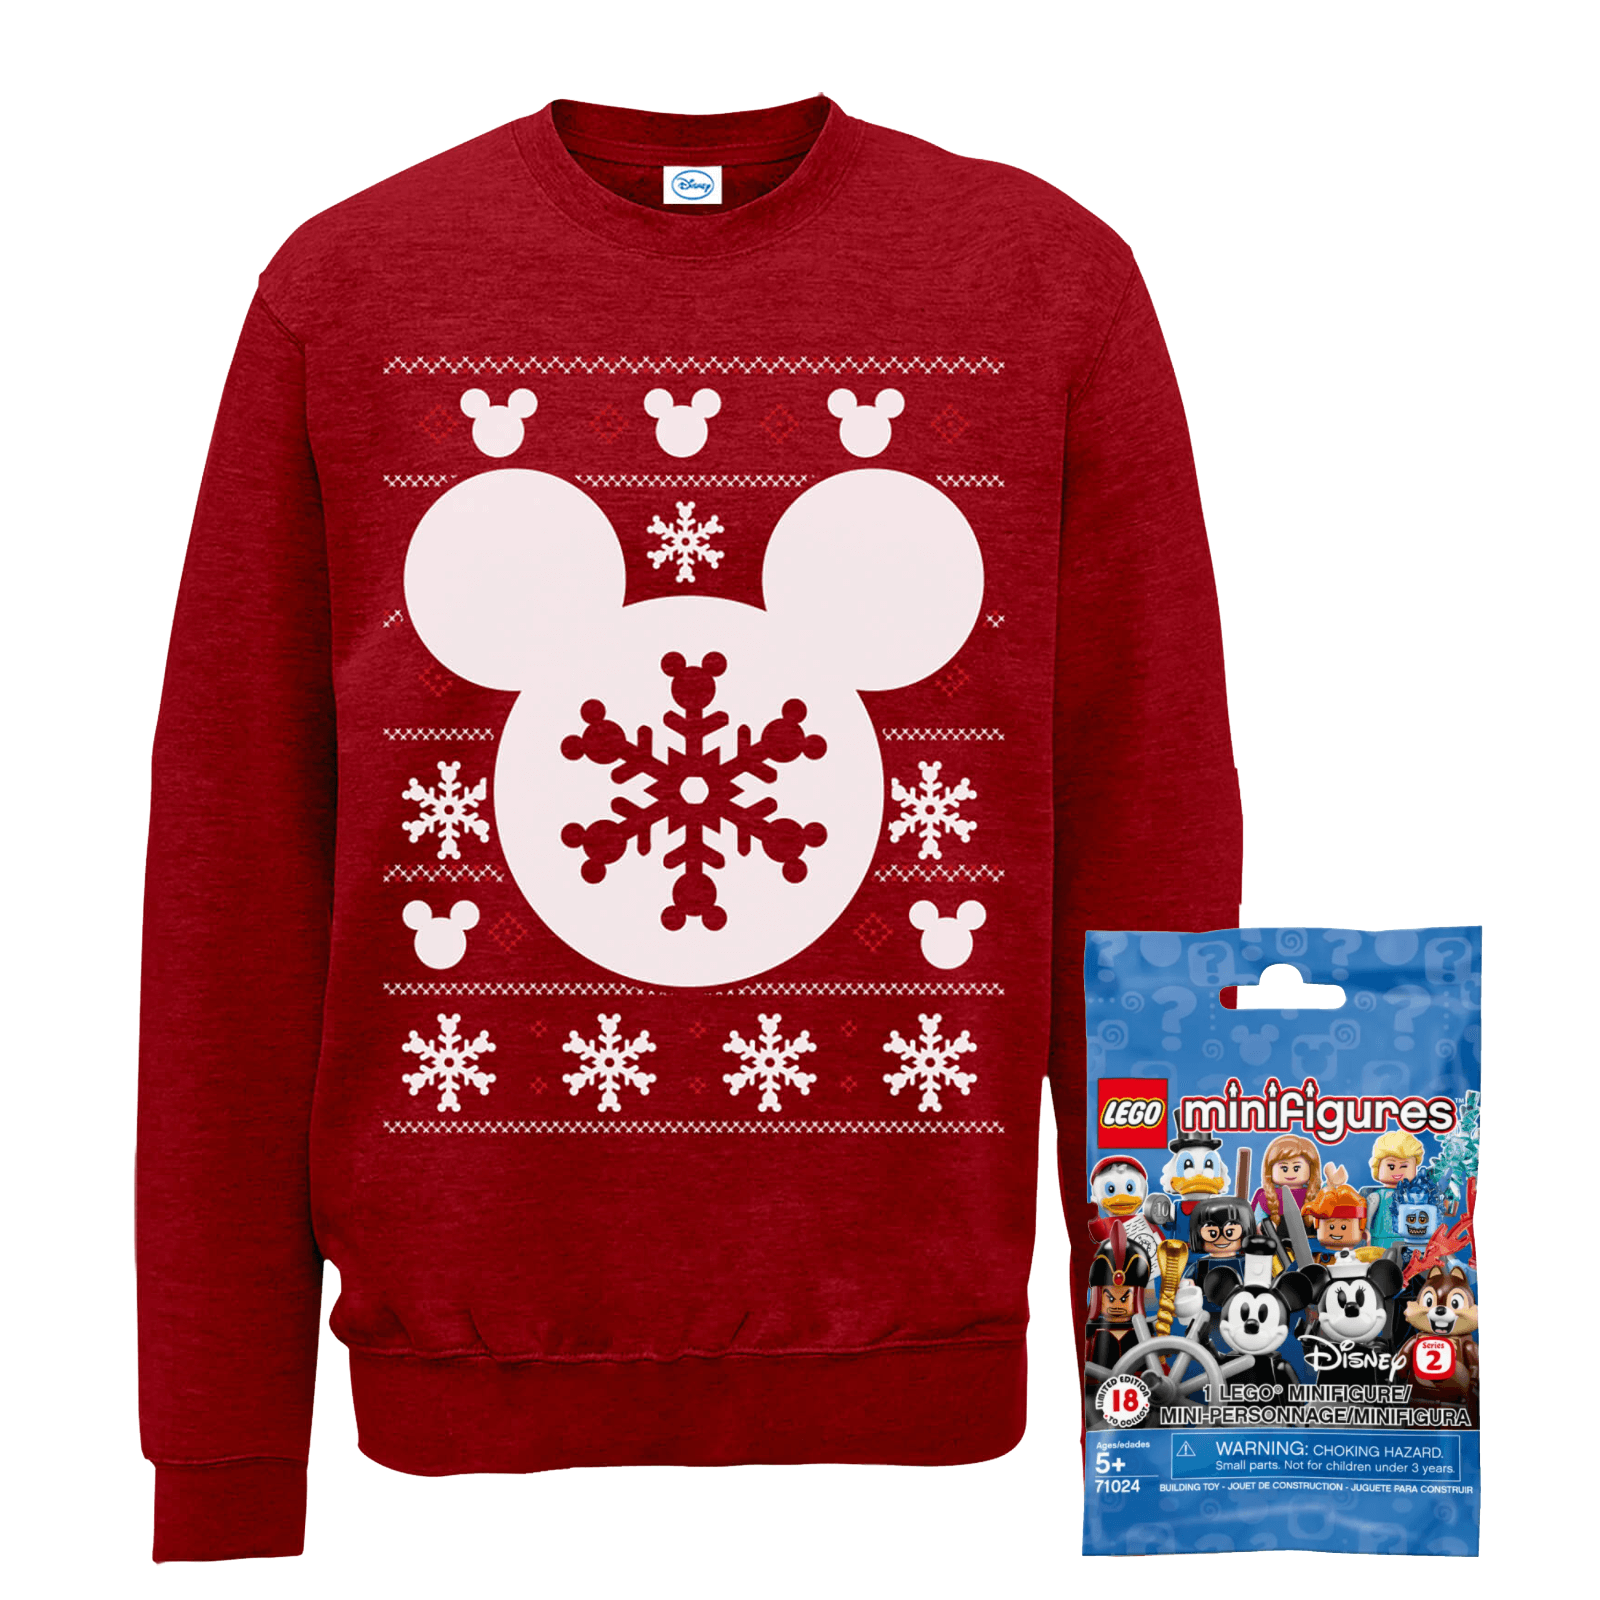 Disney Christmas Sweatshirt & Lego Minifigure Bundle - Kids' - 3-4 Years von Disney